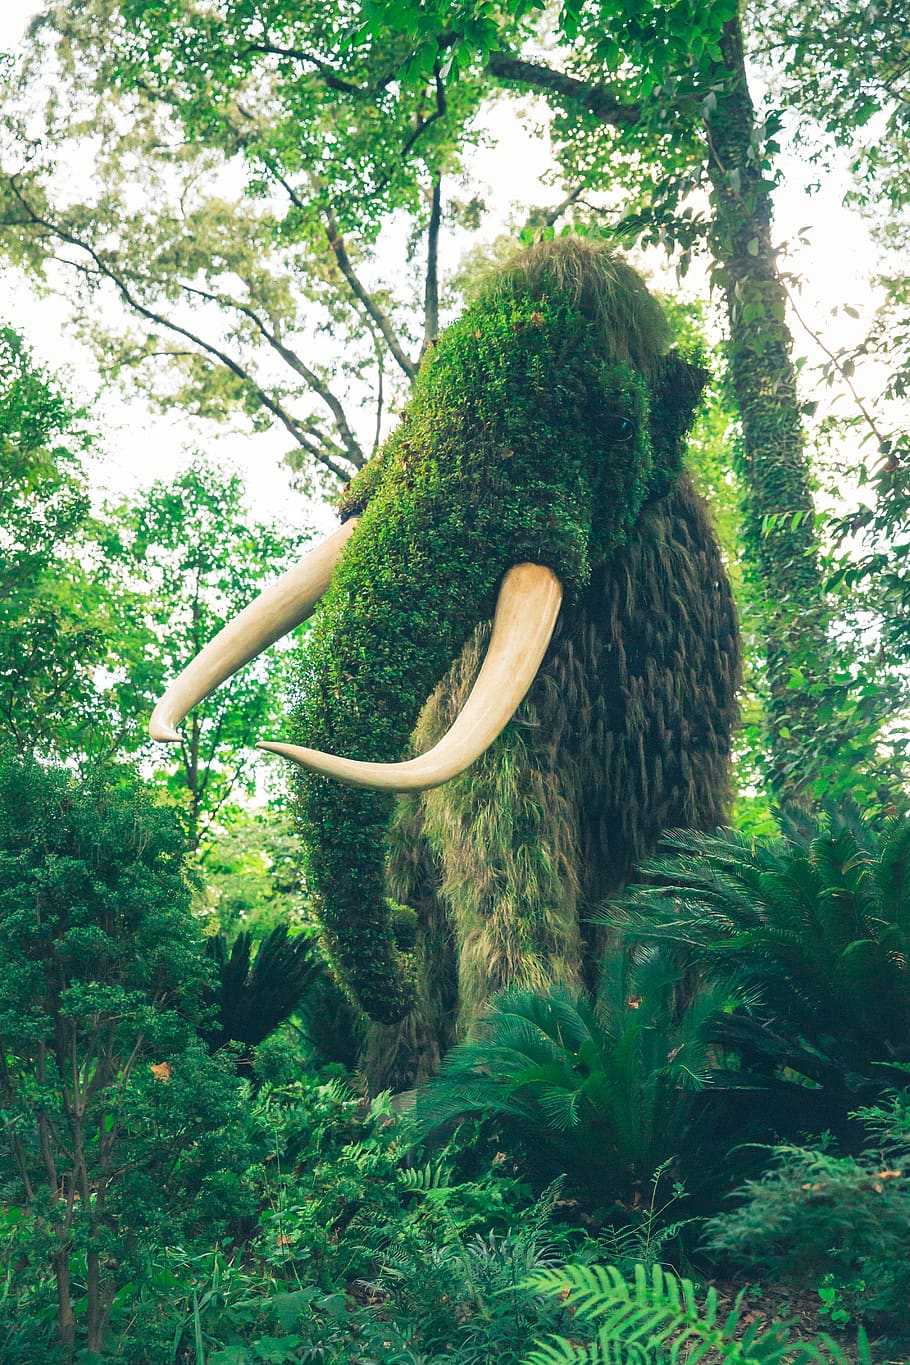 mammoth, atlanta, plant, forest, tree, atlanta botanical garden